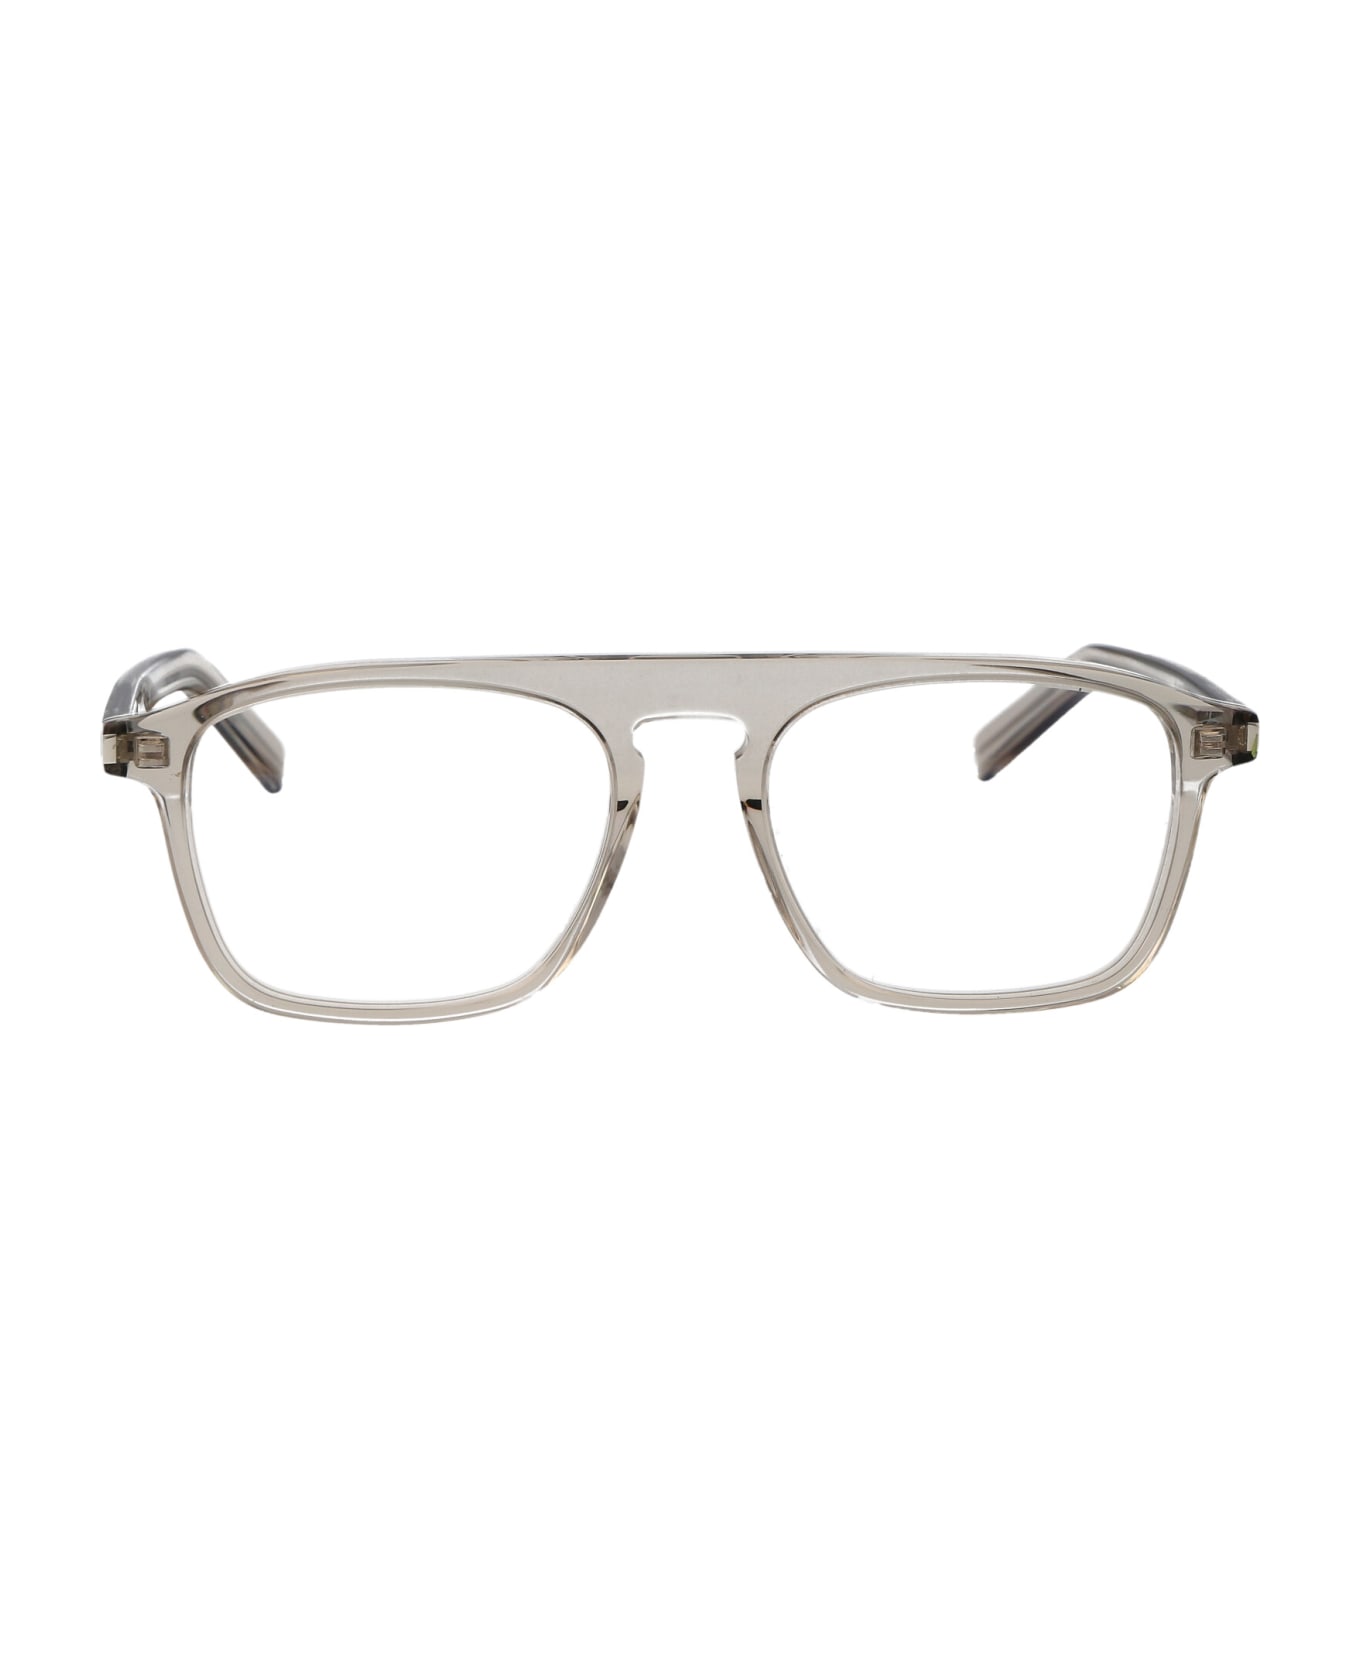 Saint Laurent Eyewear Sl 157 Glasses - 005 BEIGE BEIGE TRANSPARENT